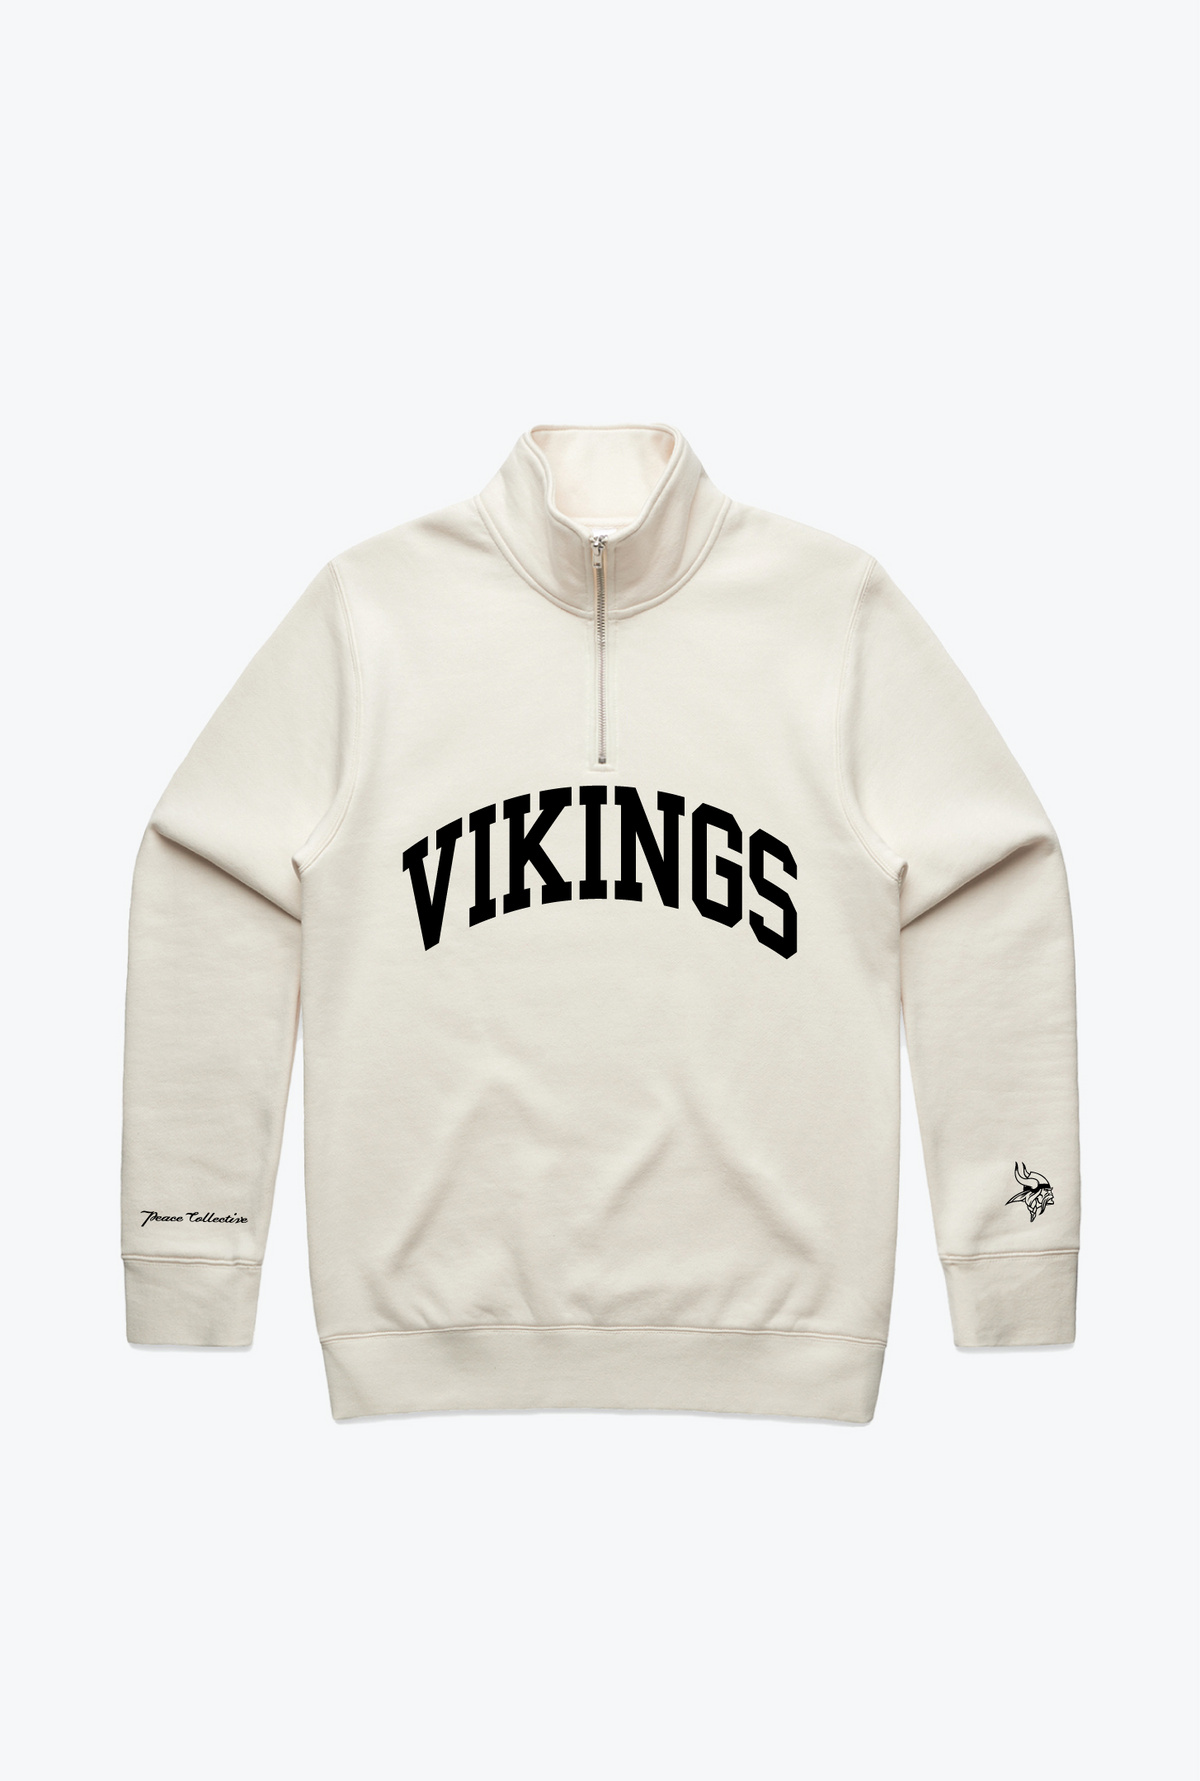 Minnesota Vikings Collegiate 1/4 Zip - Ivory